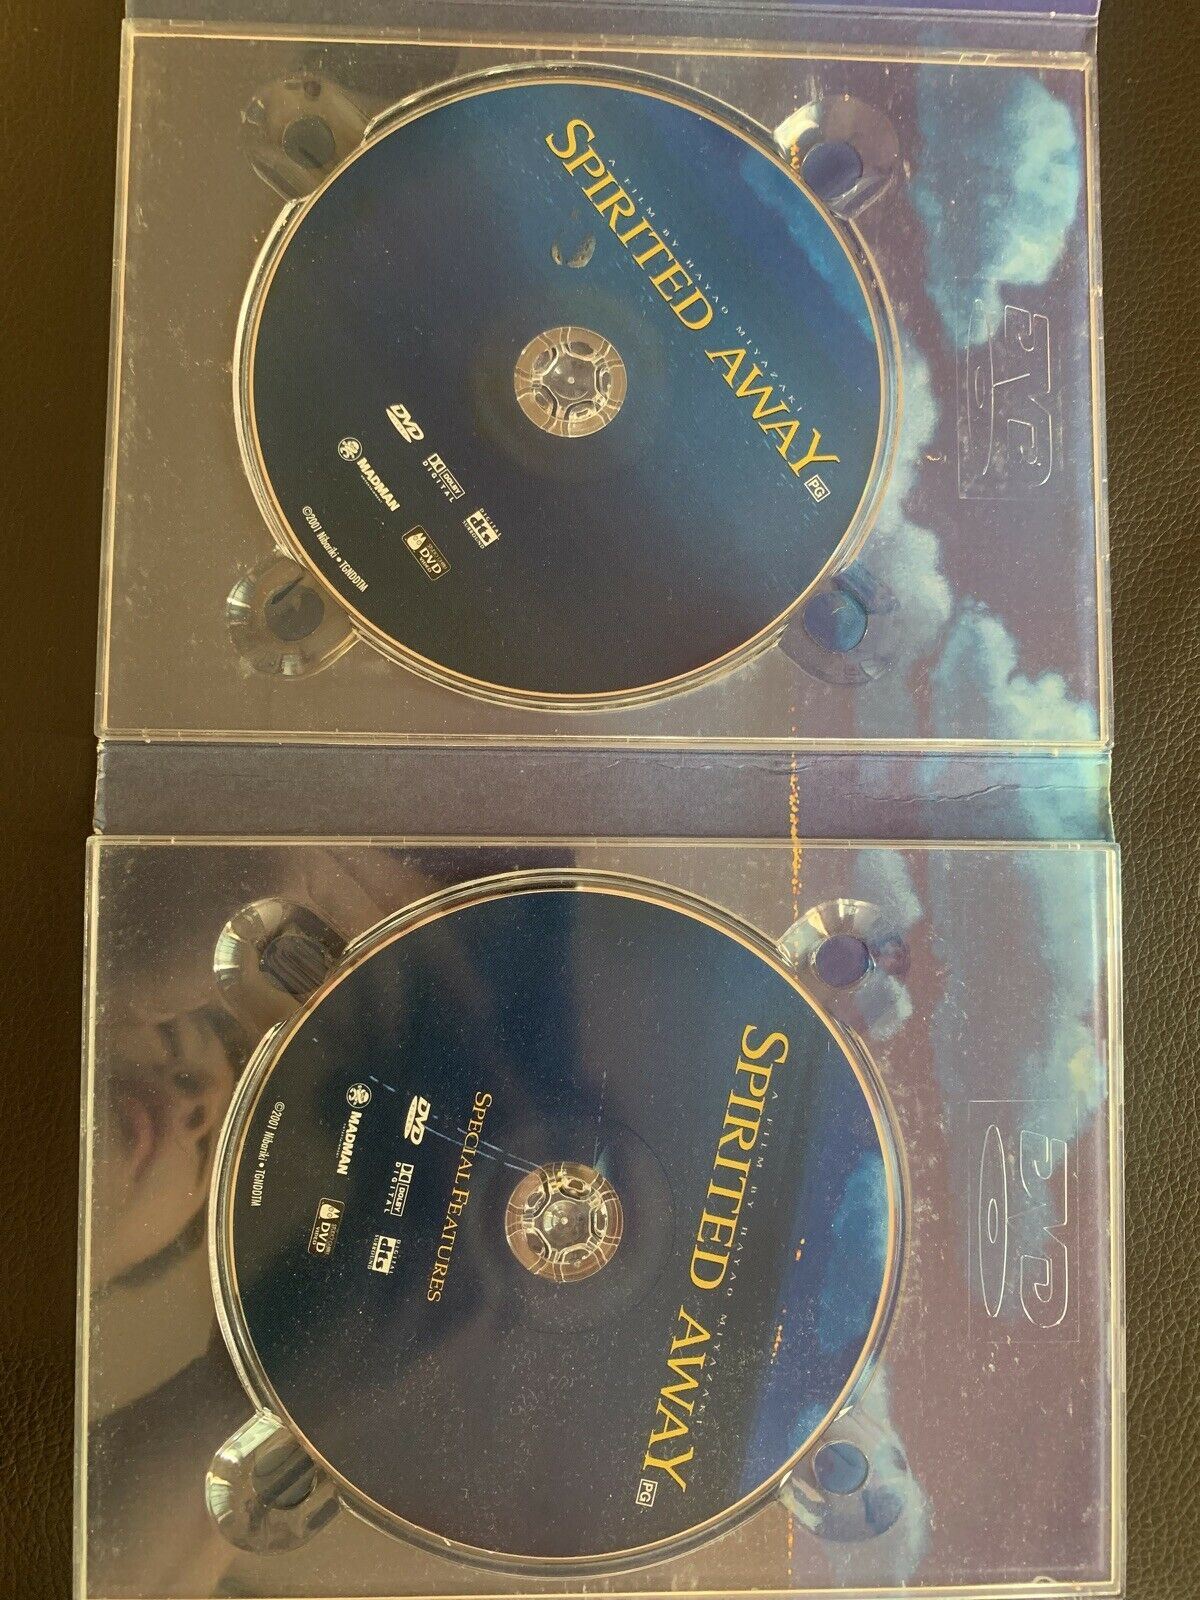 Spirited Away - Limited Edition (DVD, 2001, 2-Disc Set) Hayao Miyazaki Region 4